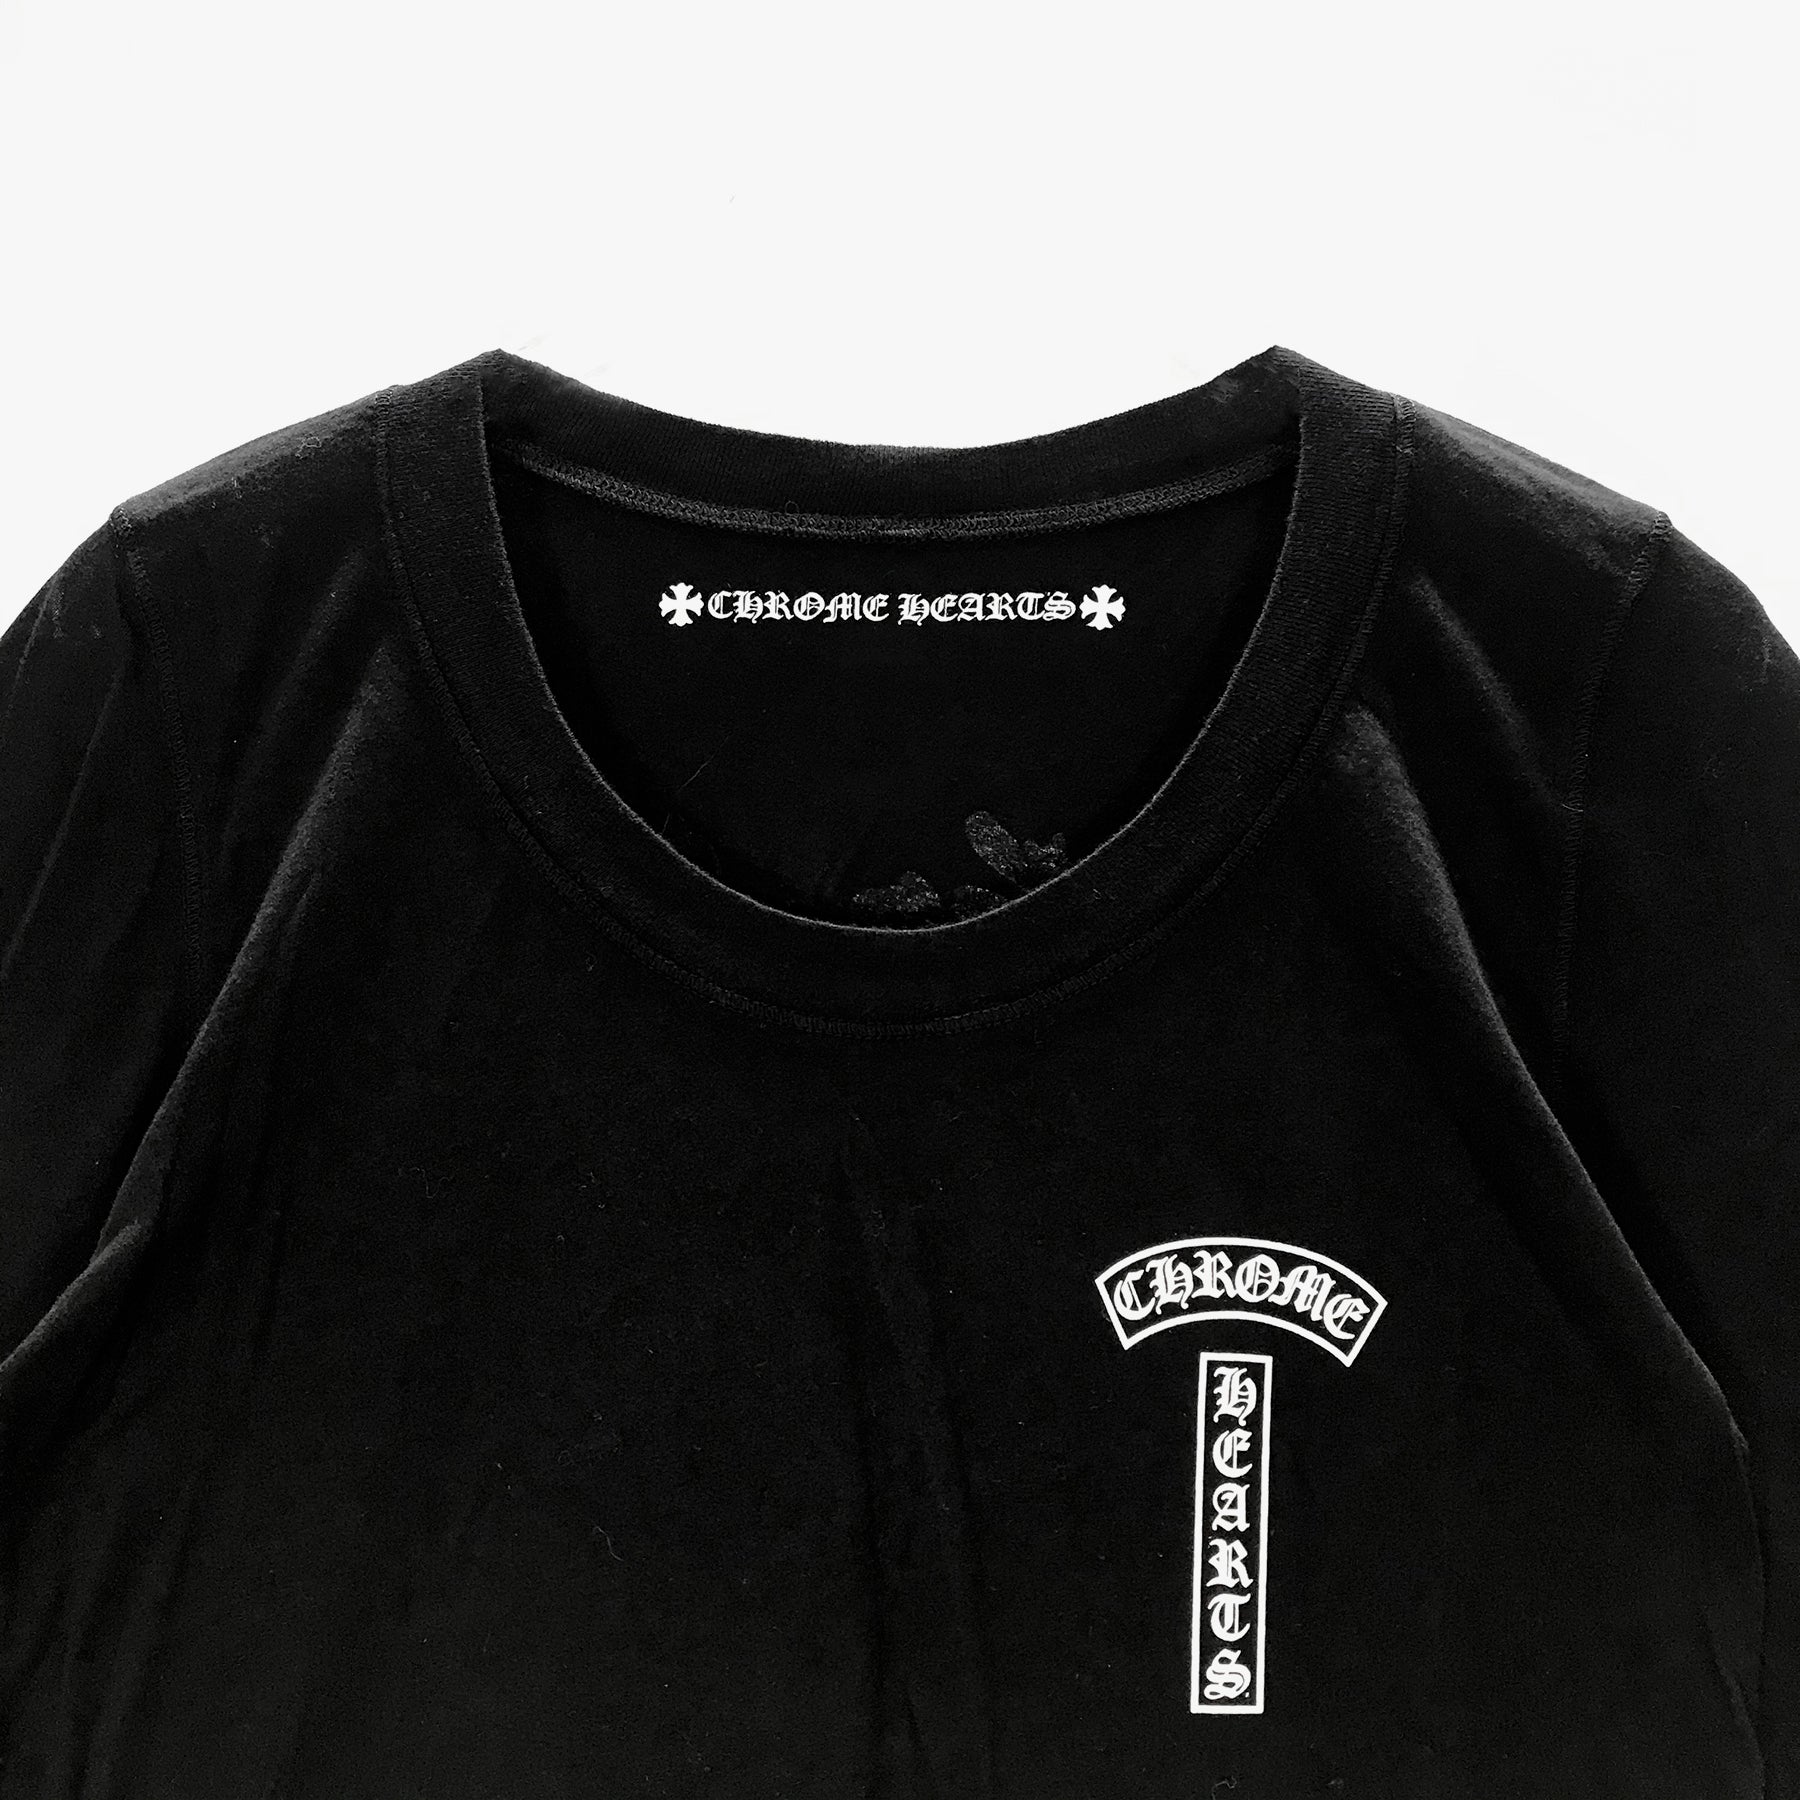 Chrome Hearts Matty Boy Vogue Black Long Sleeve T-shirt - SHENGLI ROAD MARKET